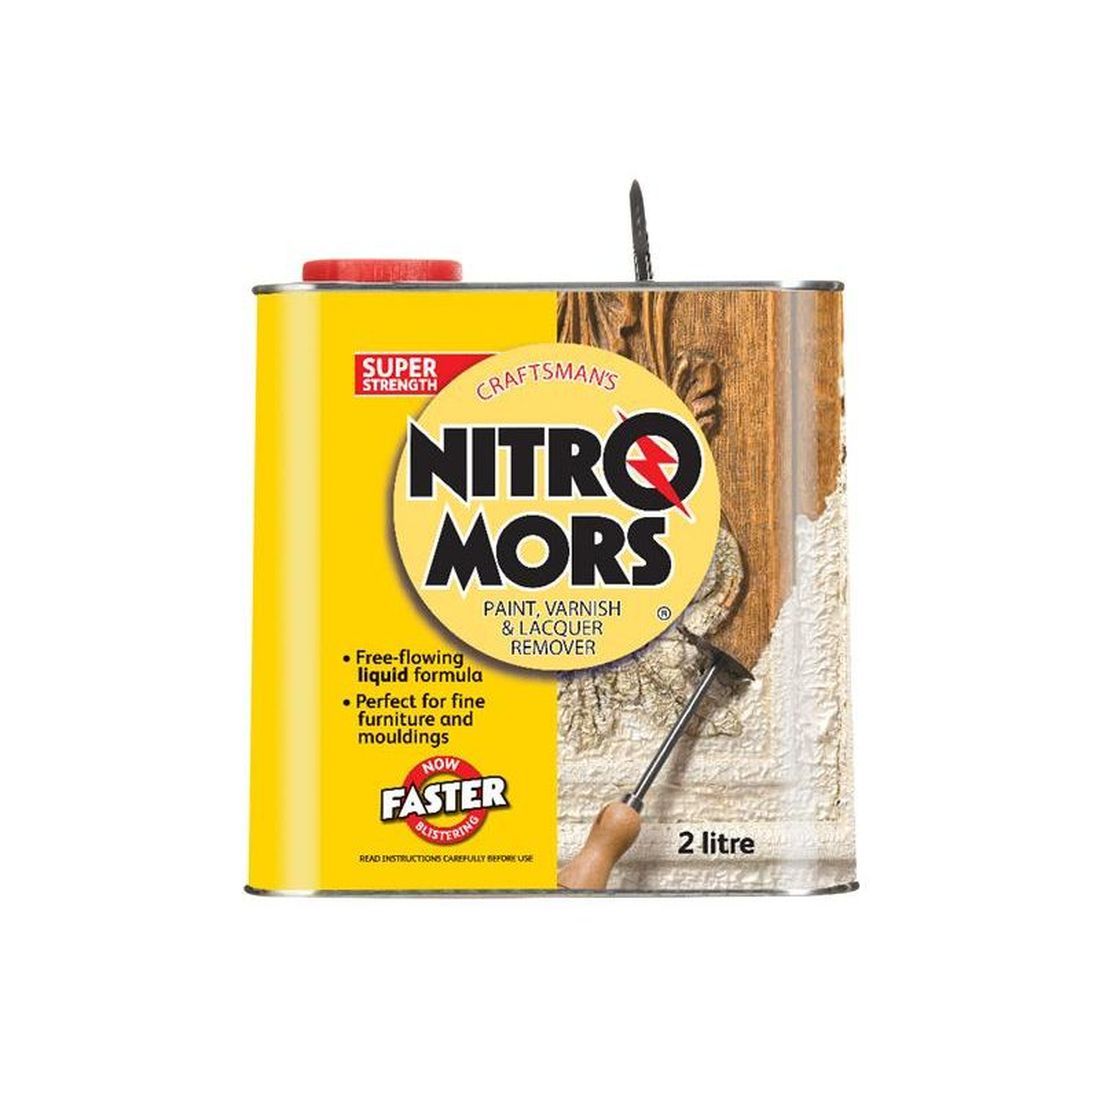 Nitromors Craftsman's Paint, Varnish & Lacquer Remover 2 litre                            